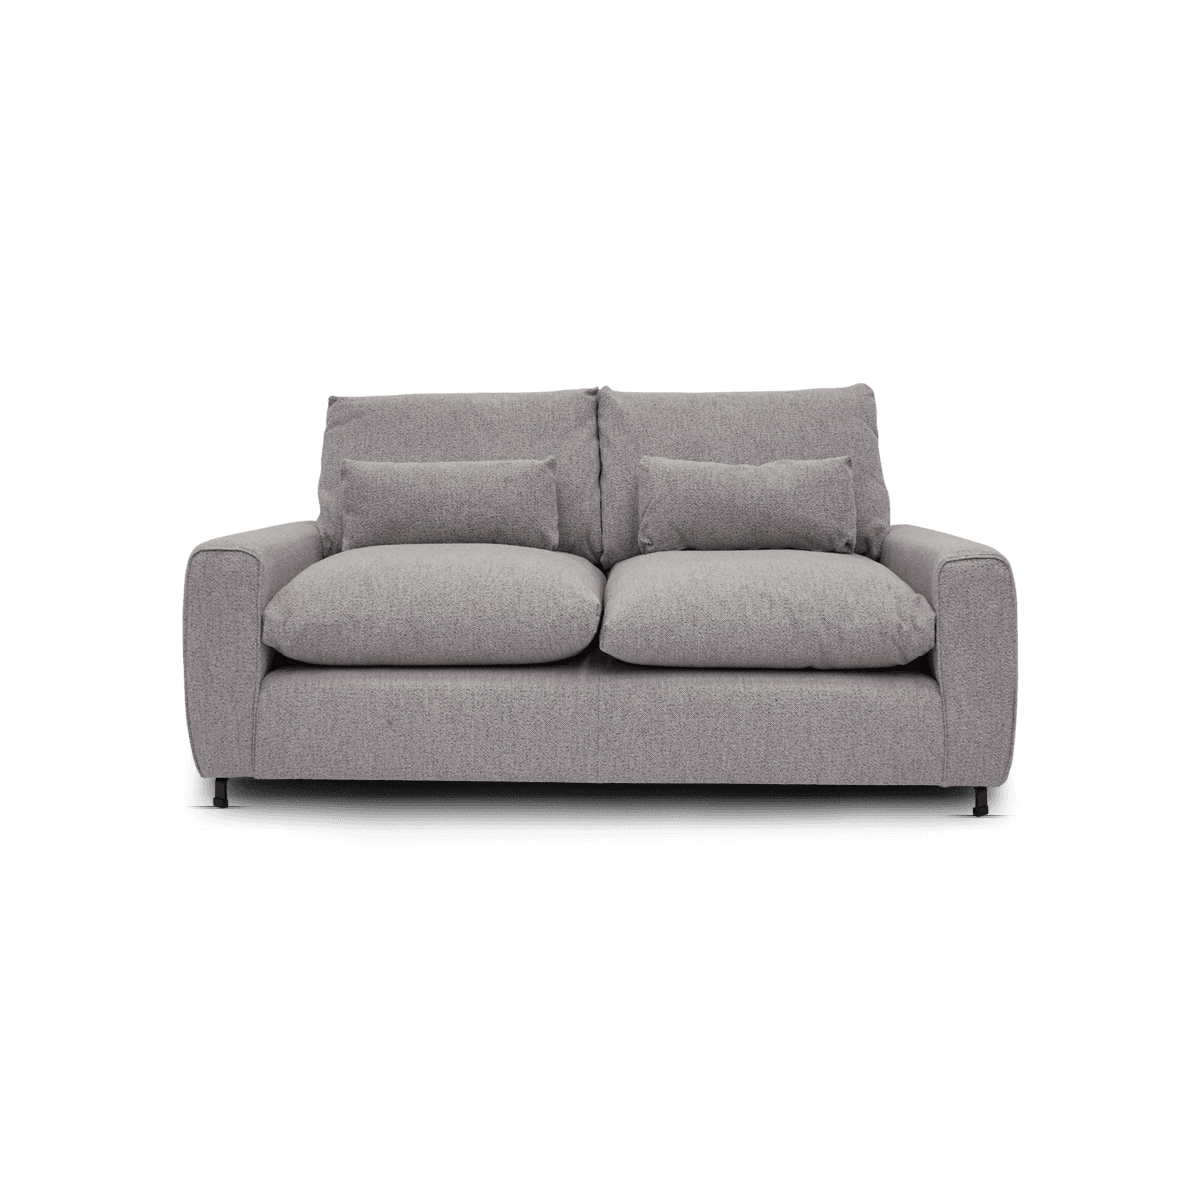 Steeton 2.5 Seater Sofa, Beige